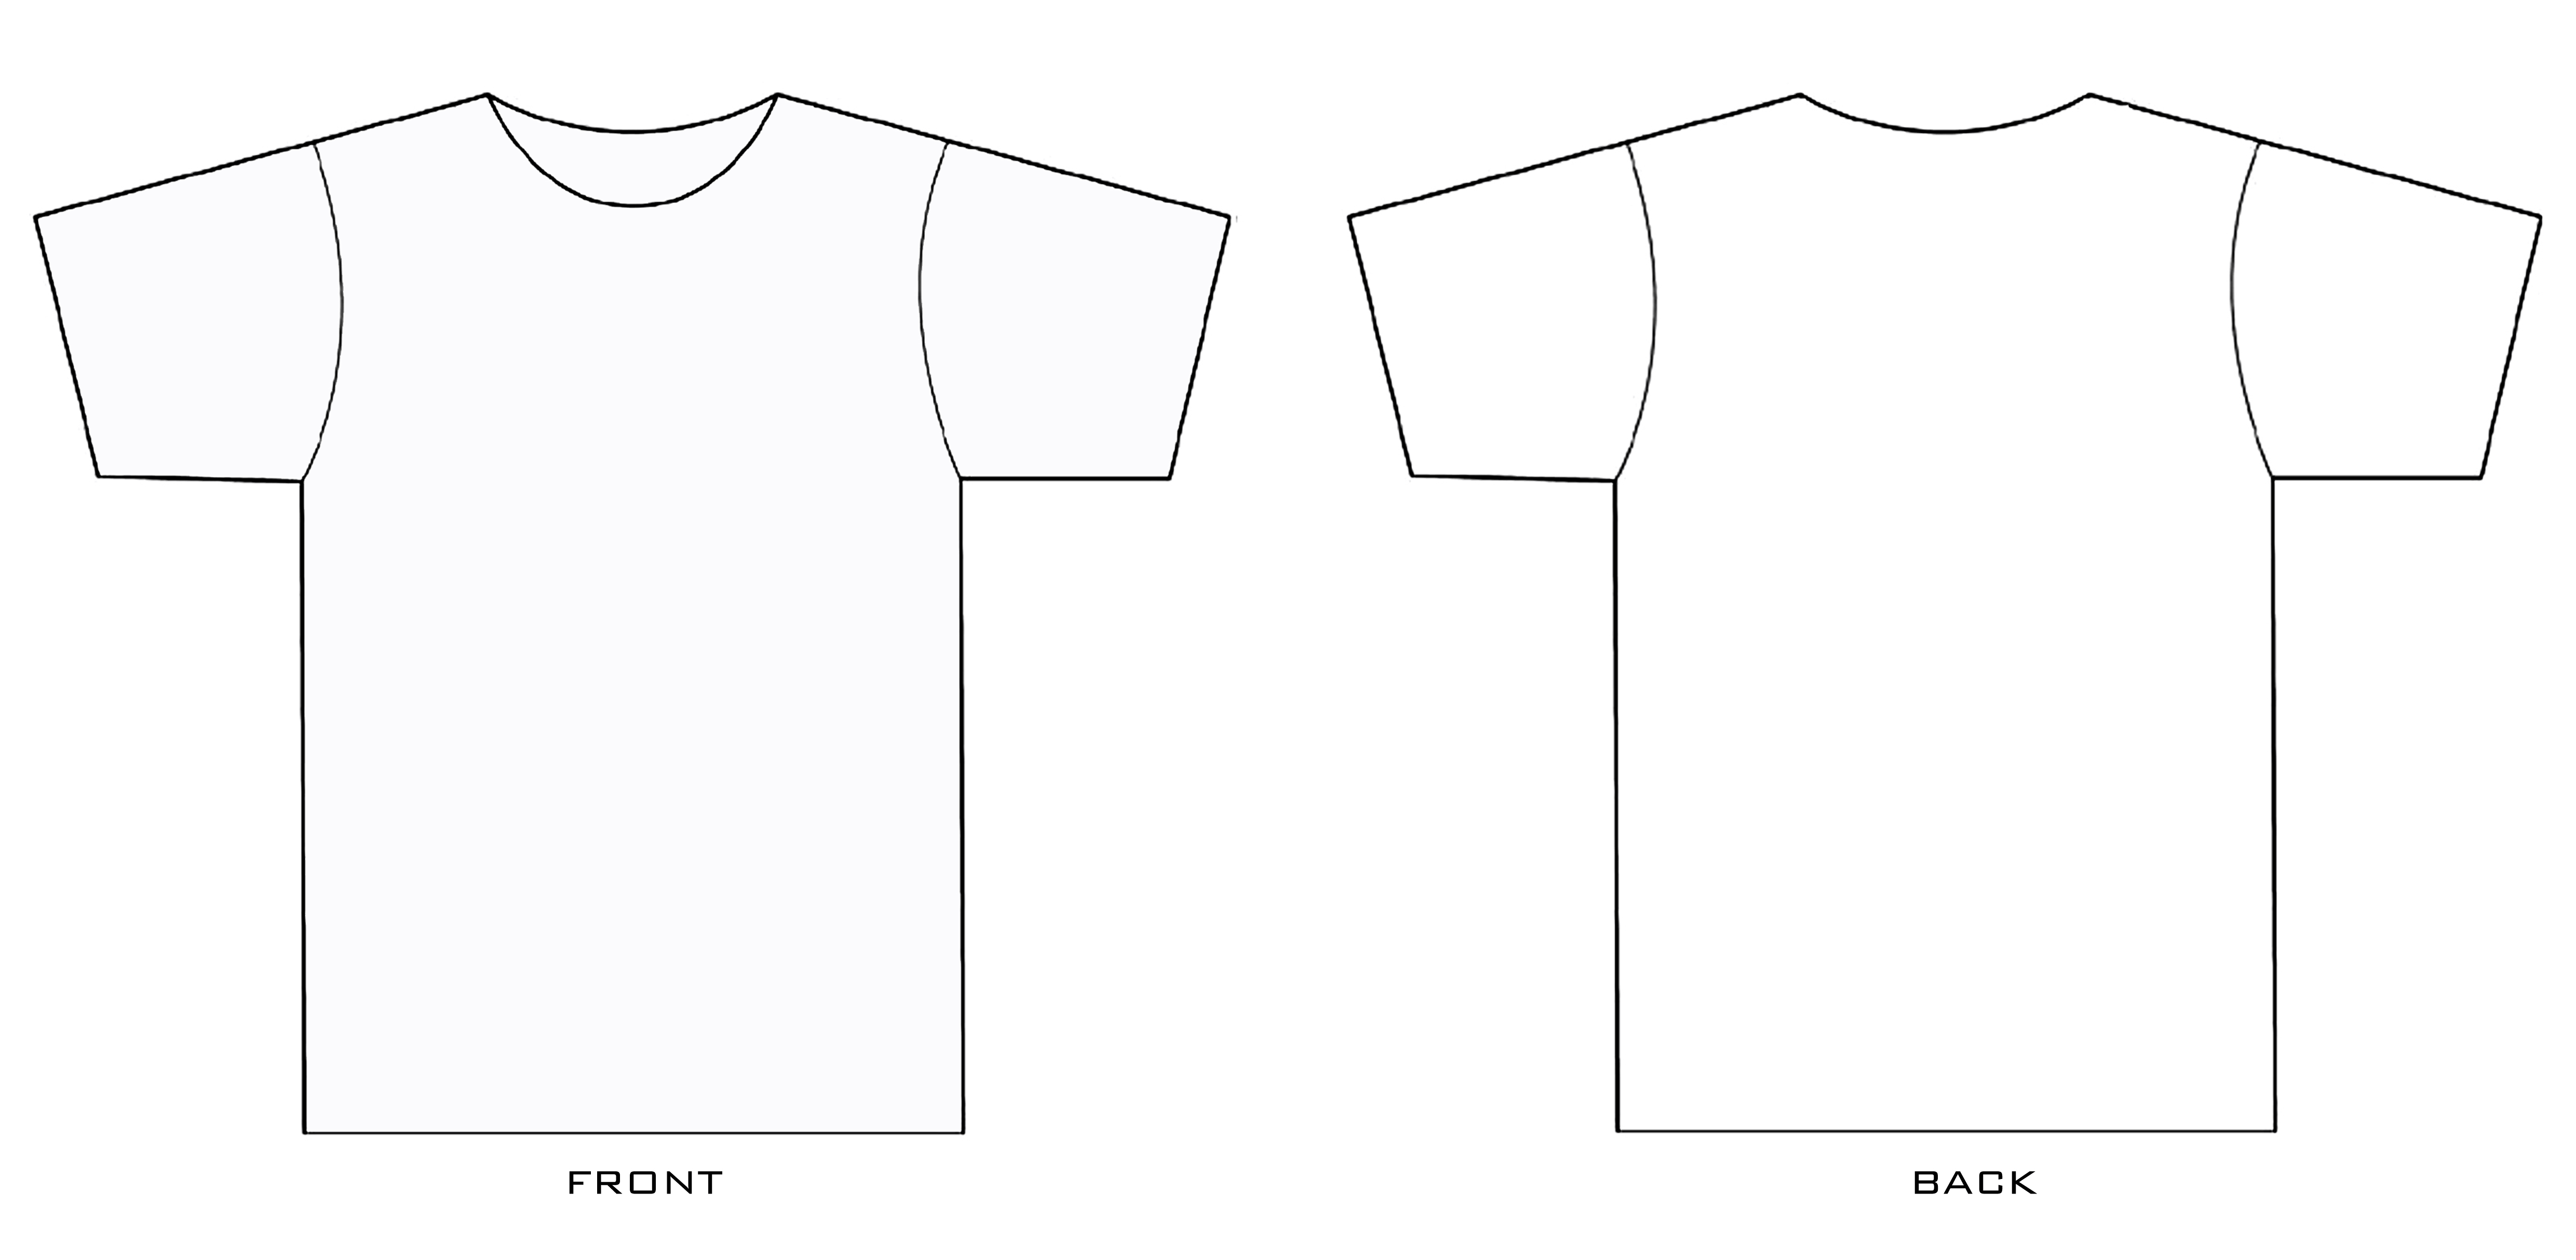 Blank Black T Shirt Design Template